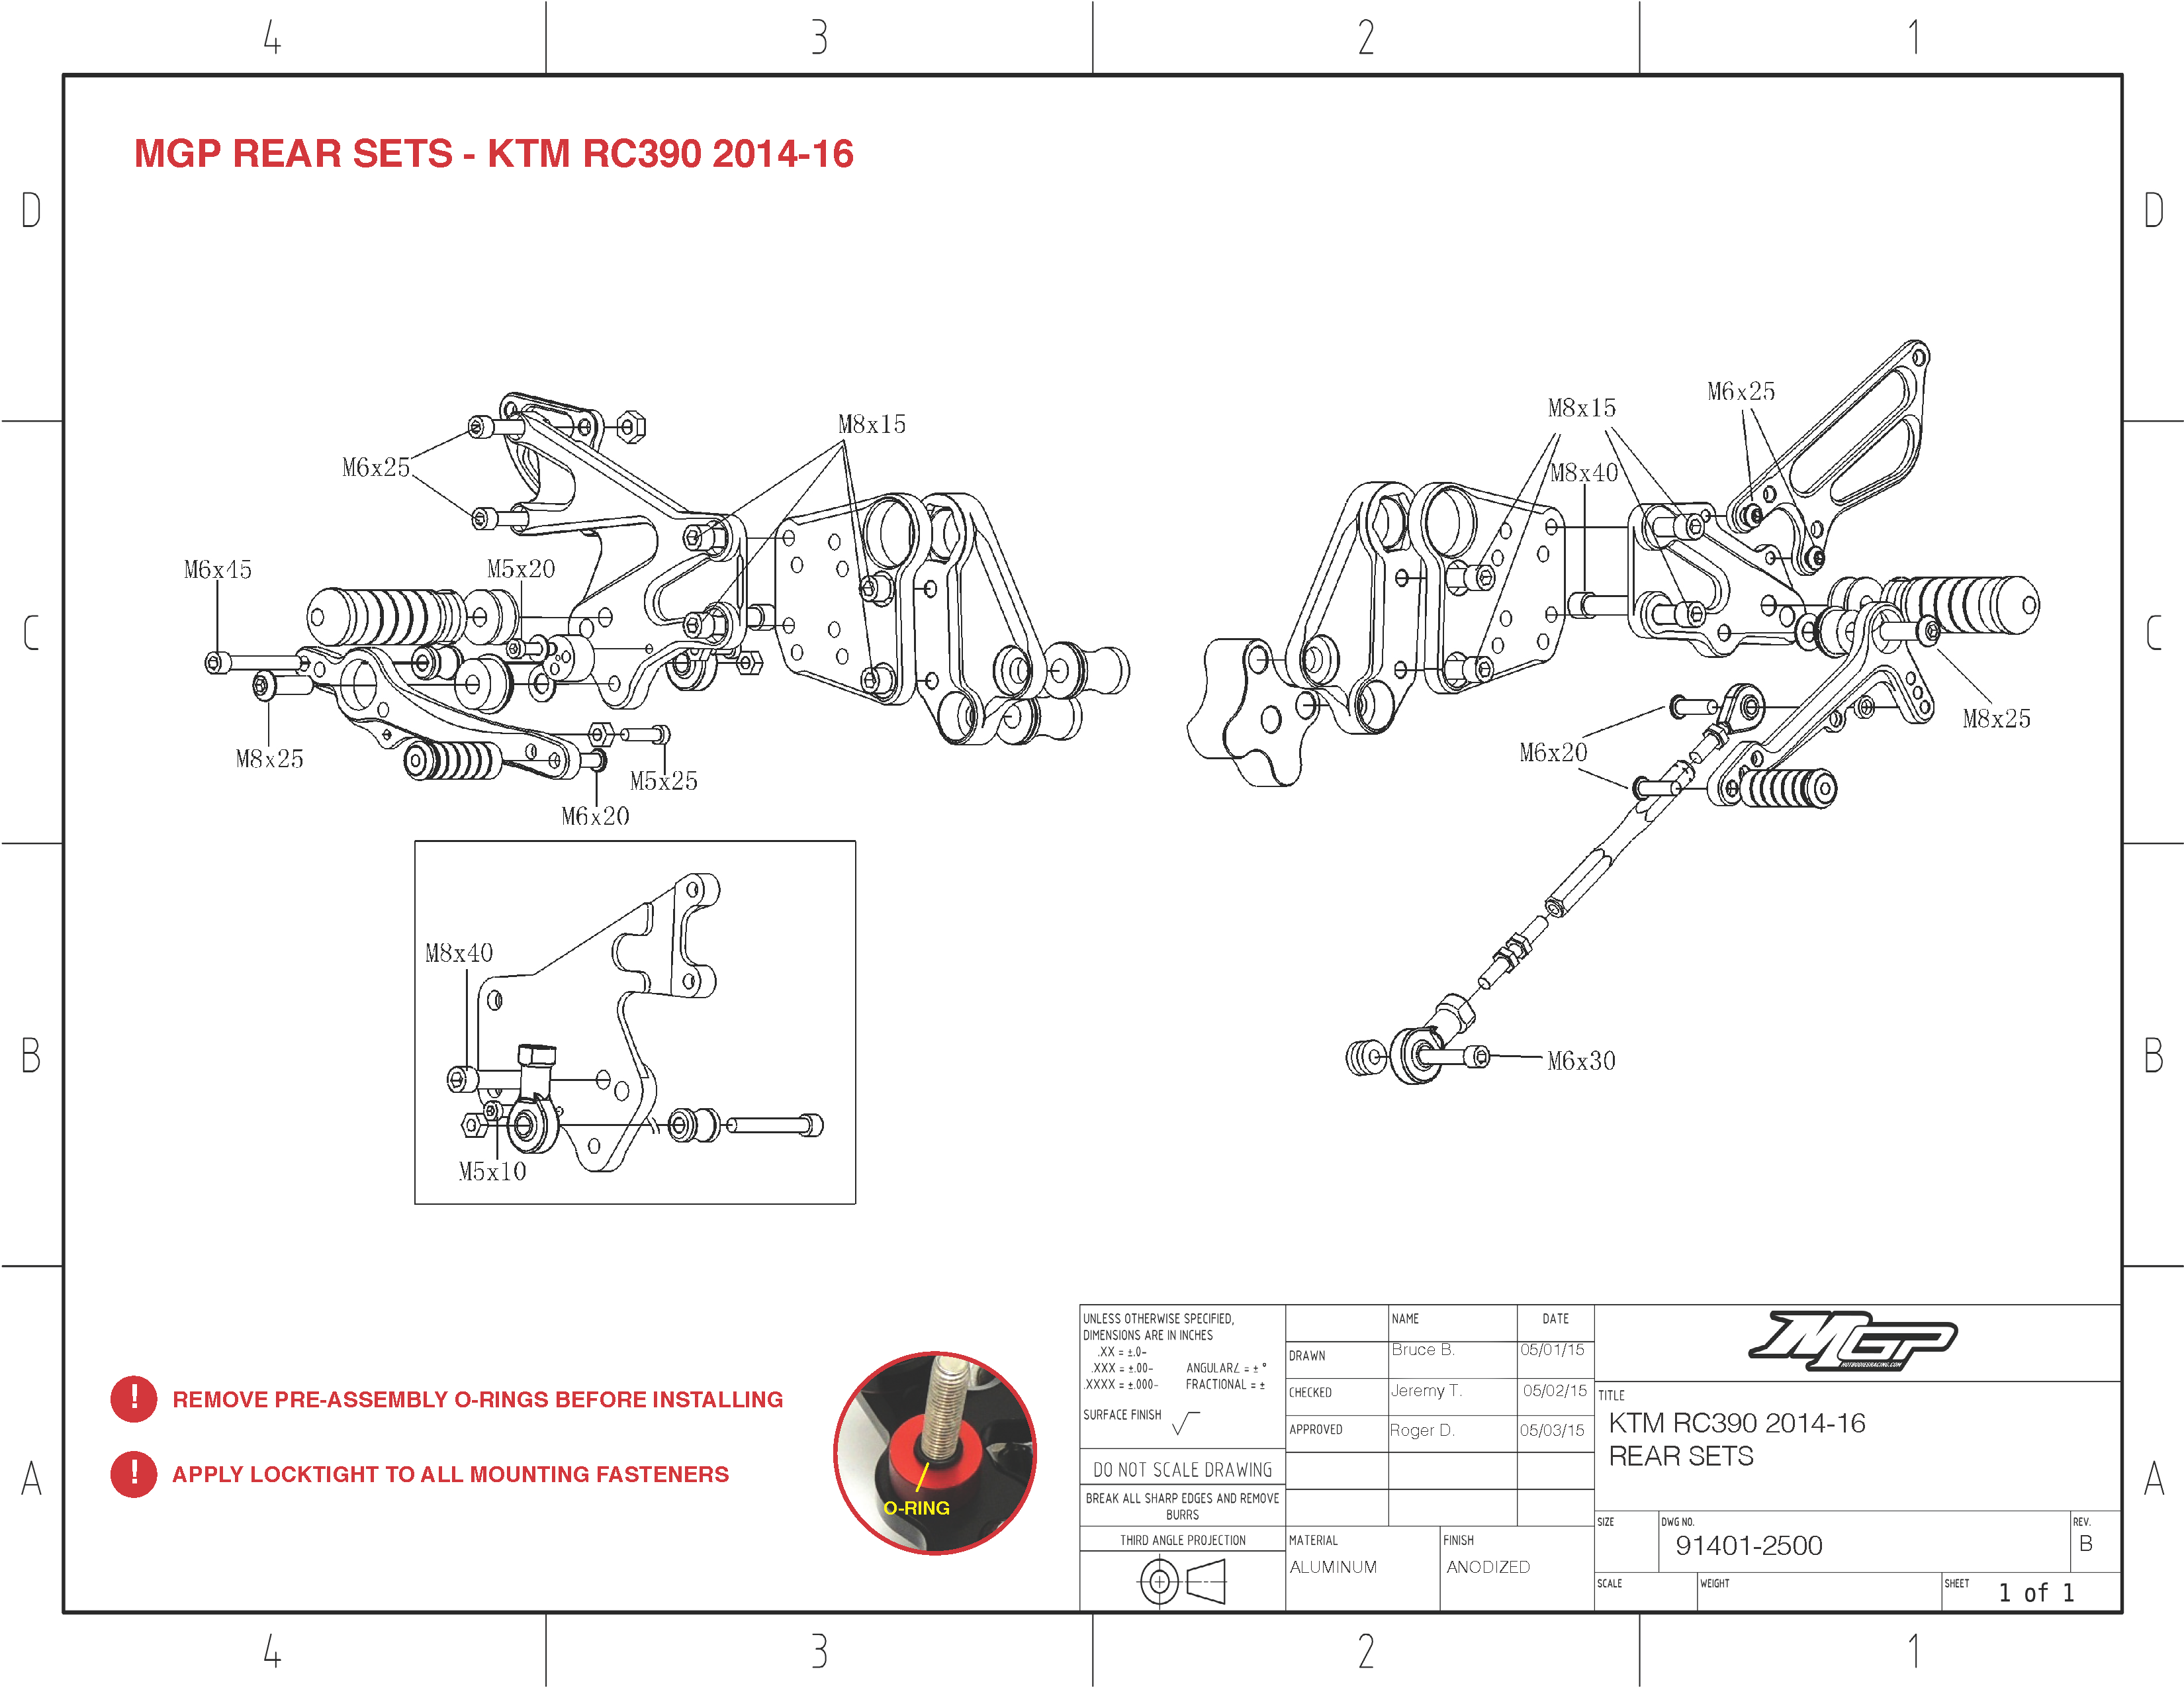 

RC390 & DUKE 390 2014-16 MGP Rear Sets Installation

